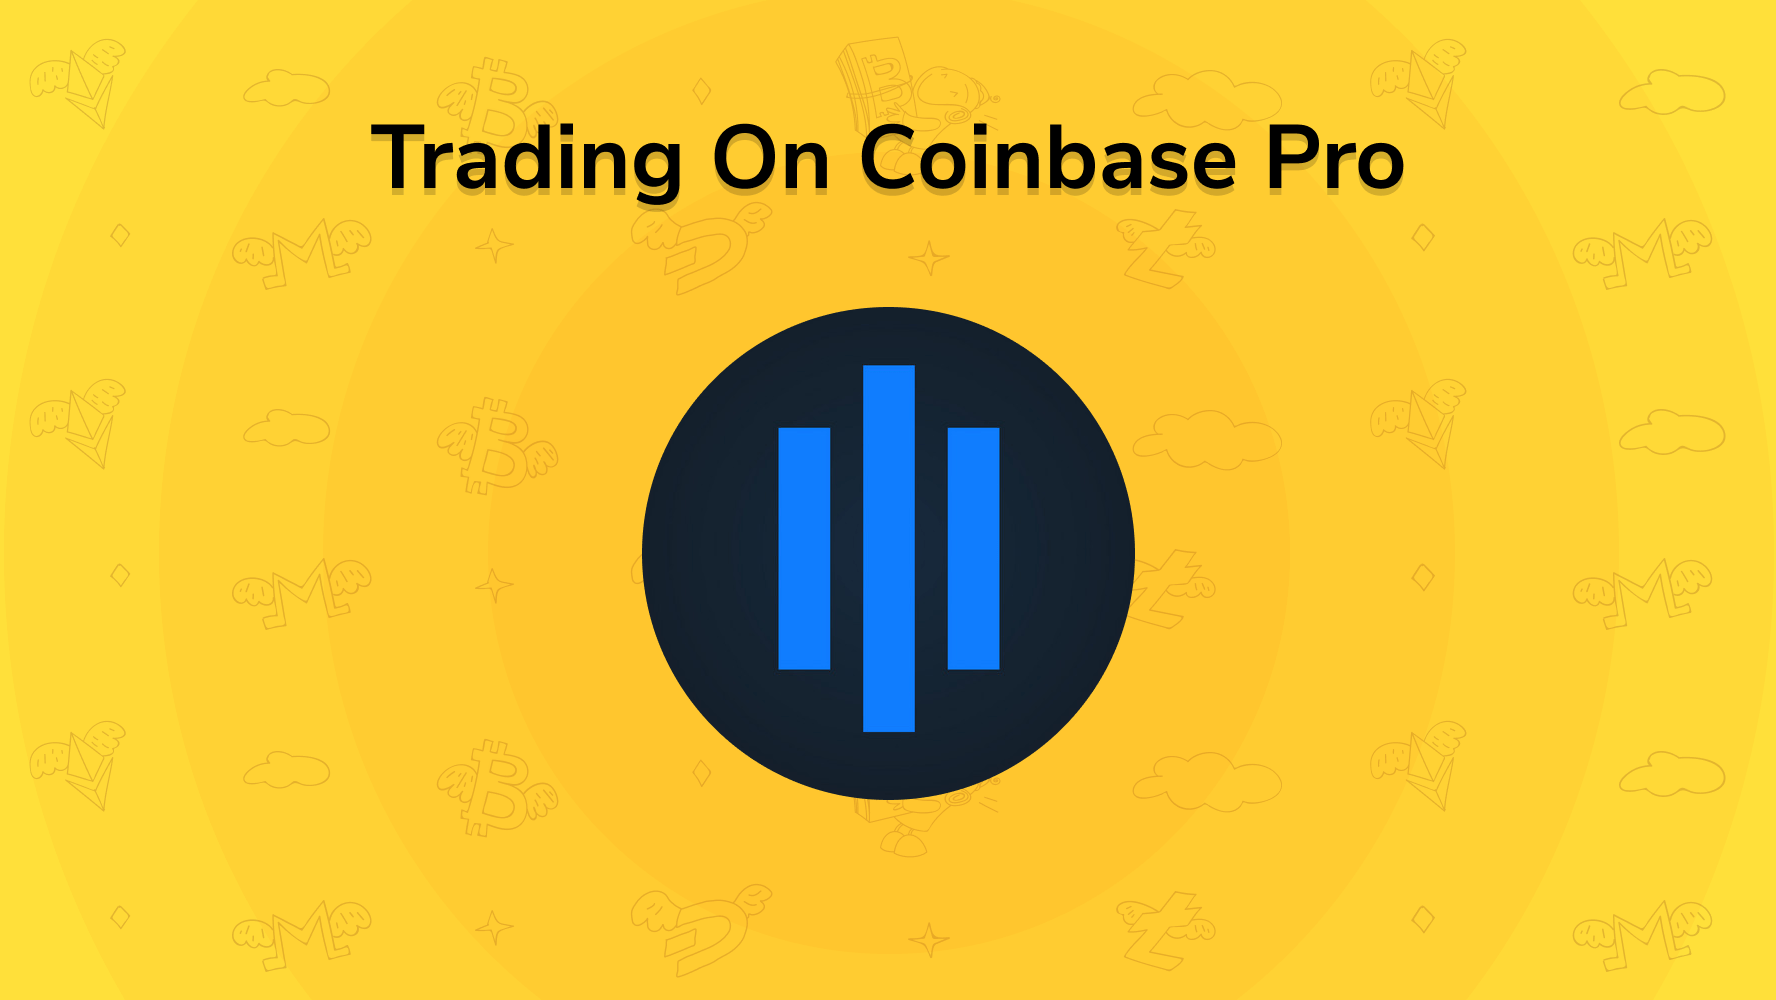 coinbase 4 - Trading On Coinbase Platform 2021